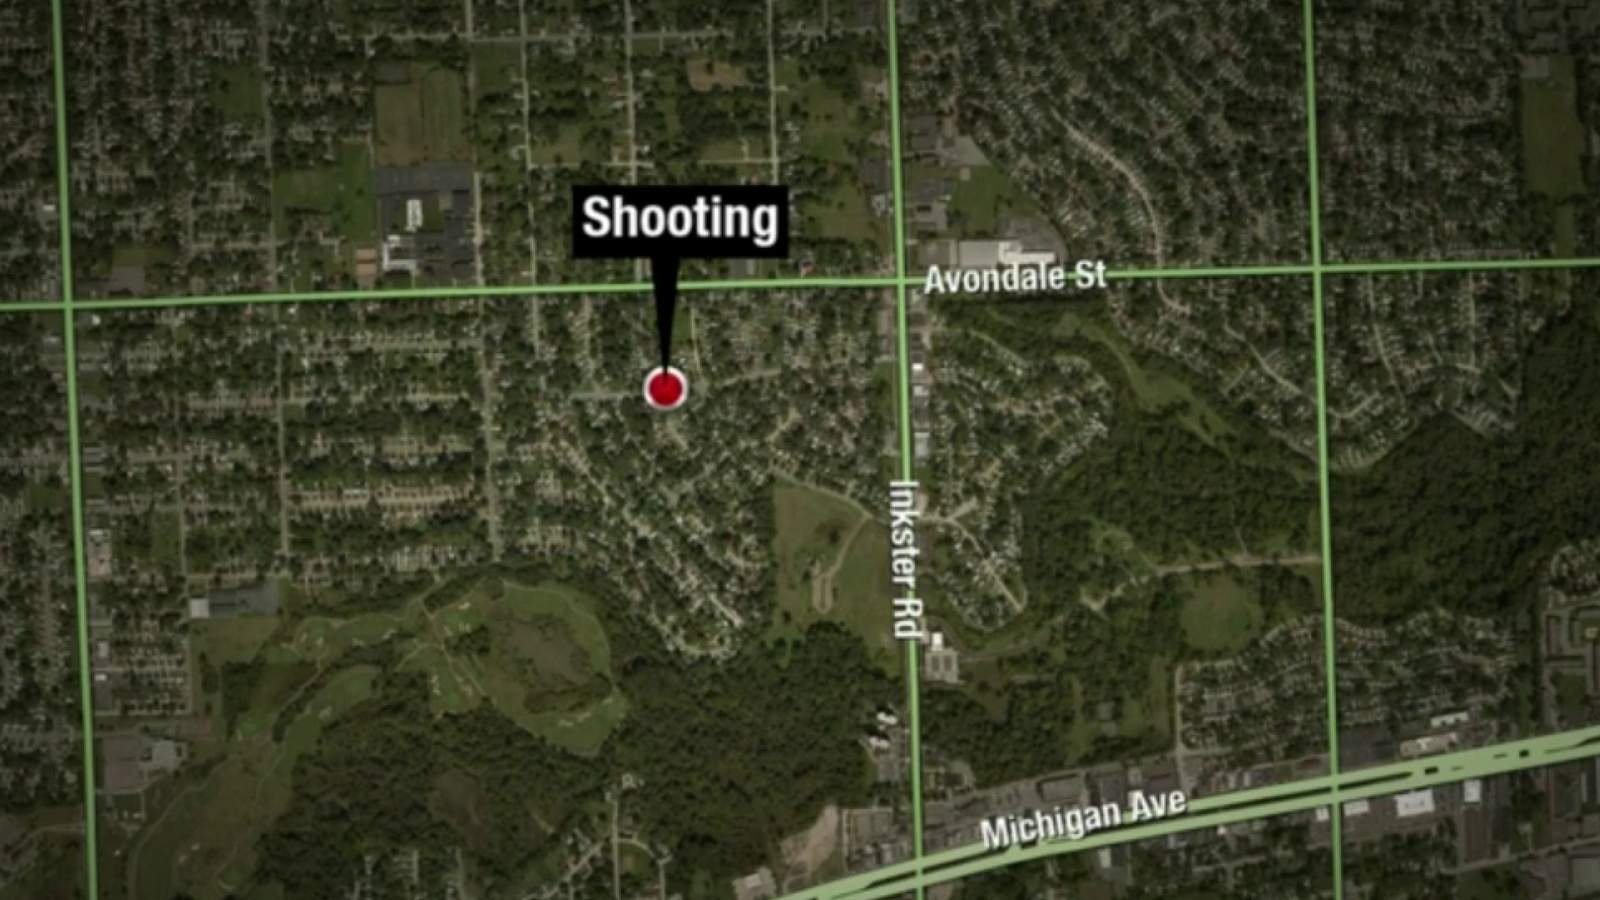 Man shot twice in attempted robbery in Inkster, Michigan state troopers seek culprit